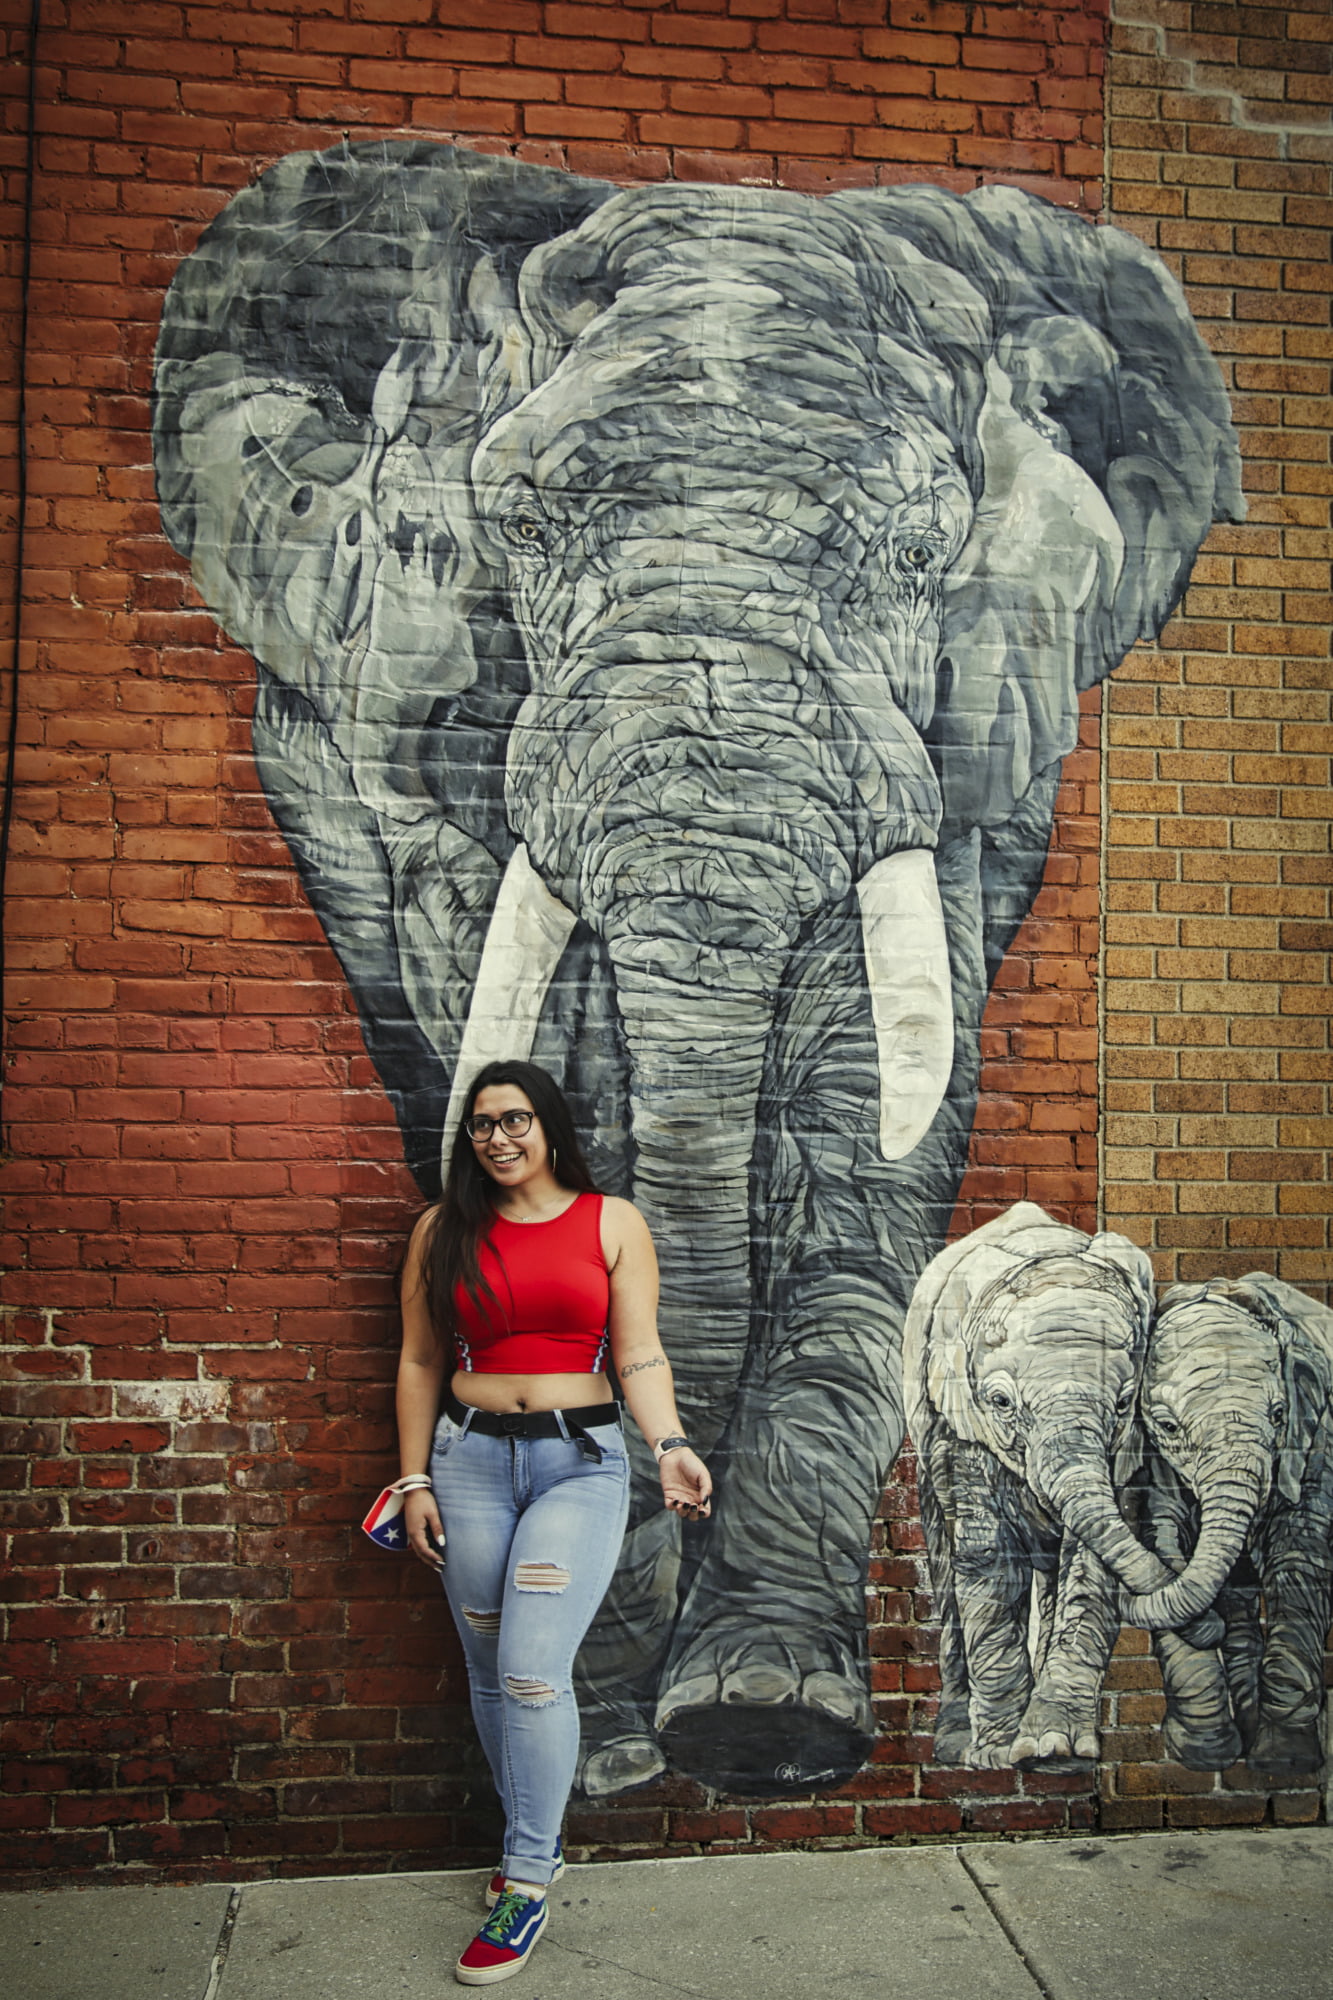 Makayla And The Elephant Mural